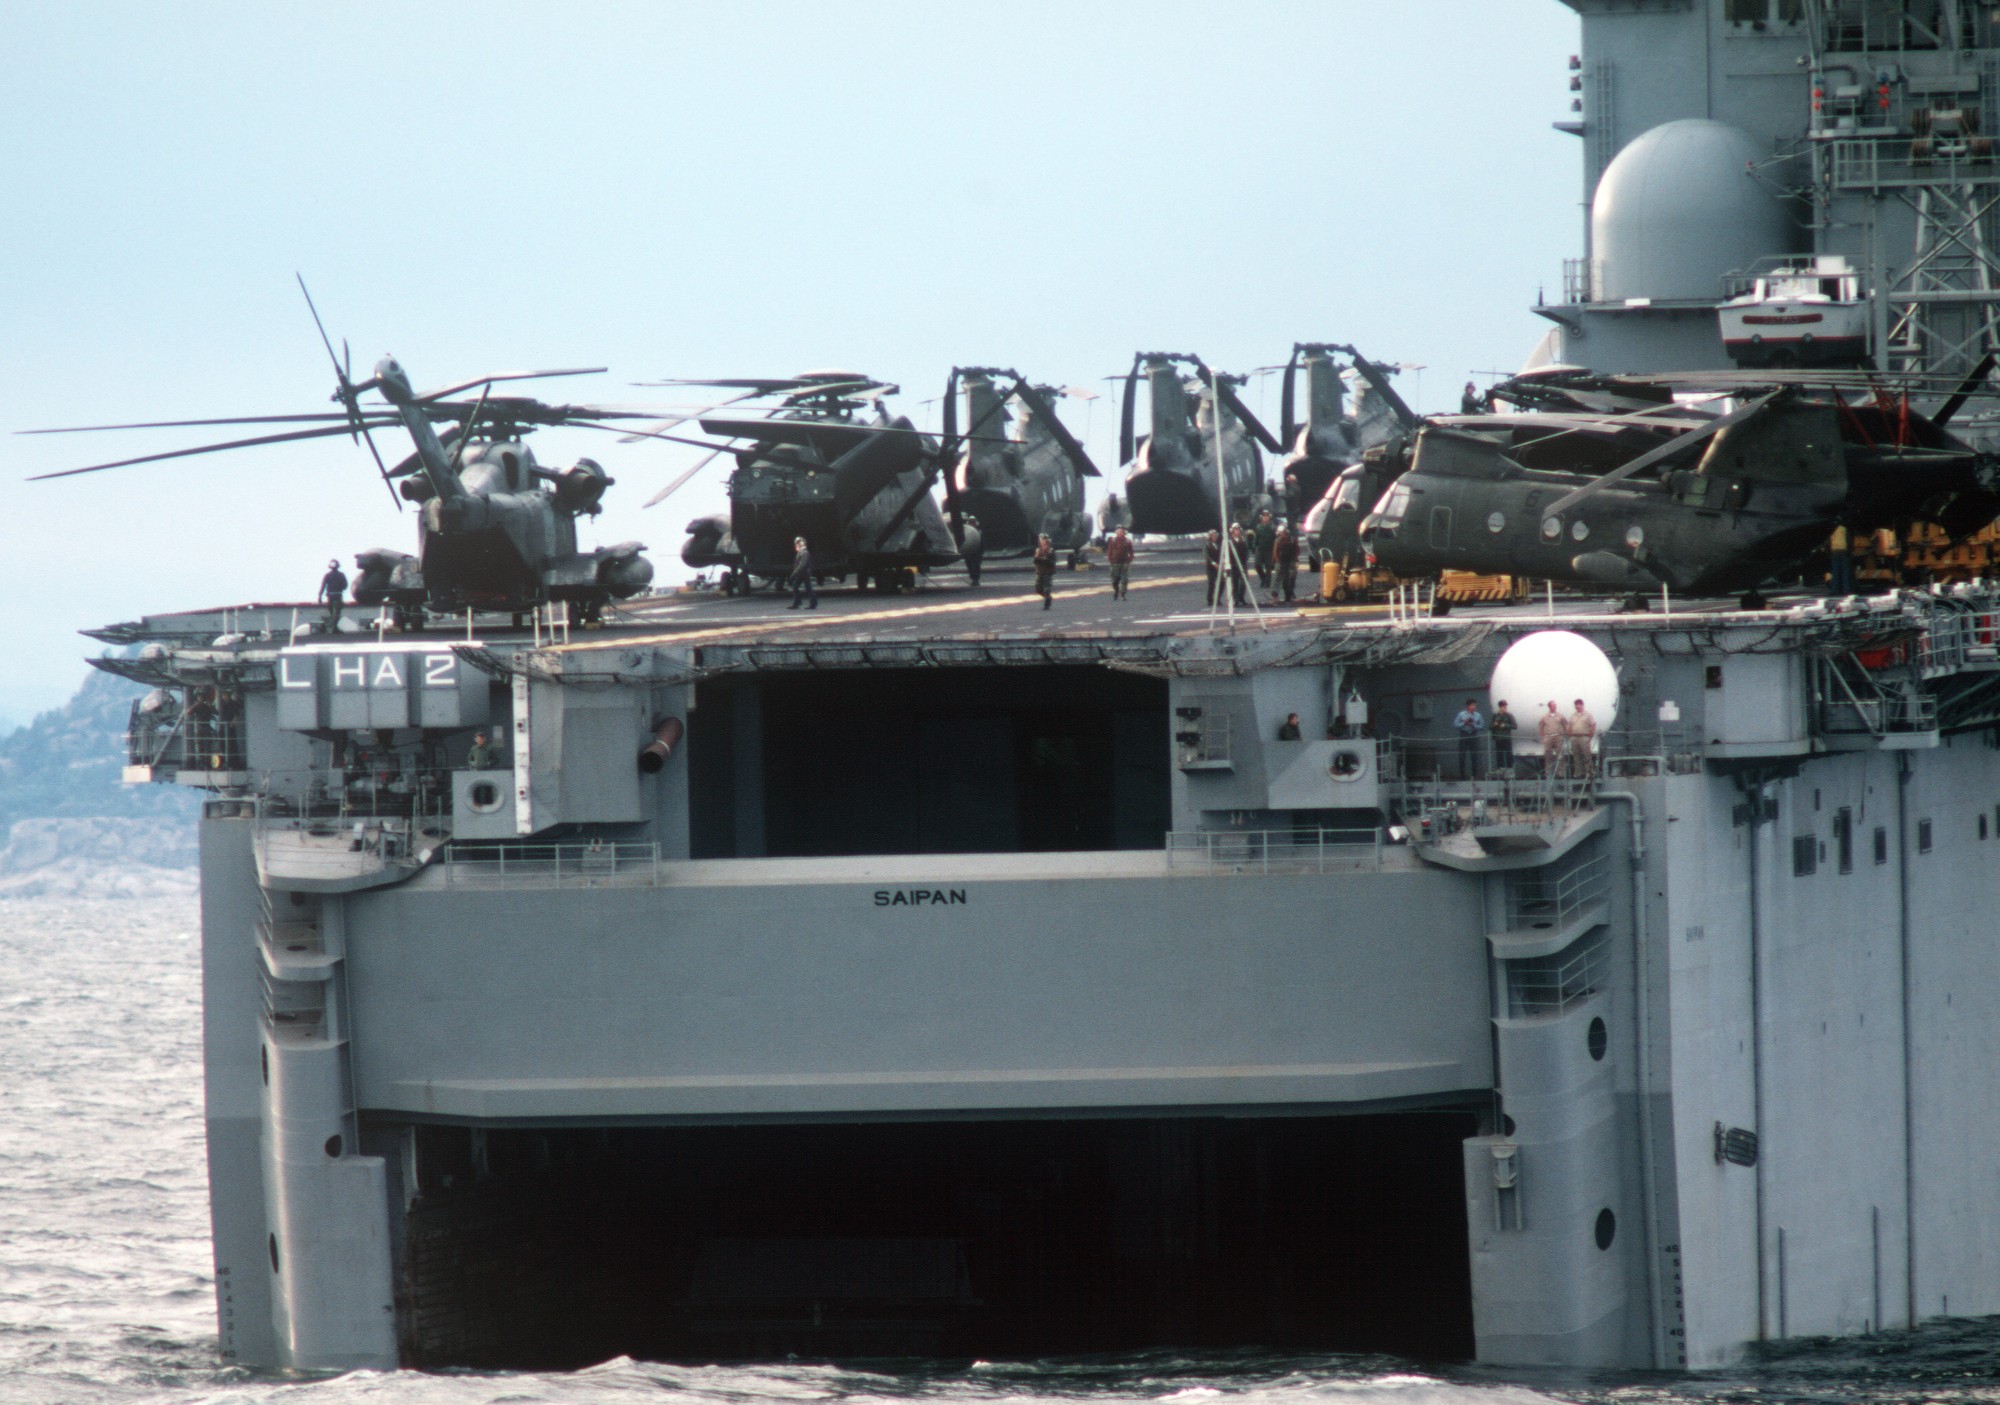 lha-2 uss saipan tarawa class amphibious assault ship us navy 22nd mau hmm-162 usmc nato exercise northern wedding 58